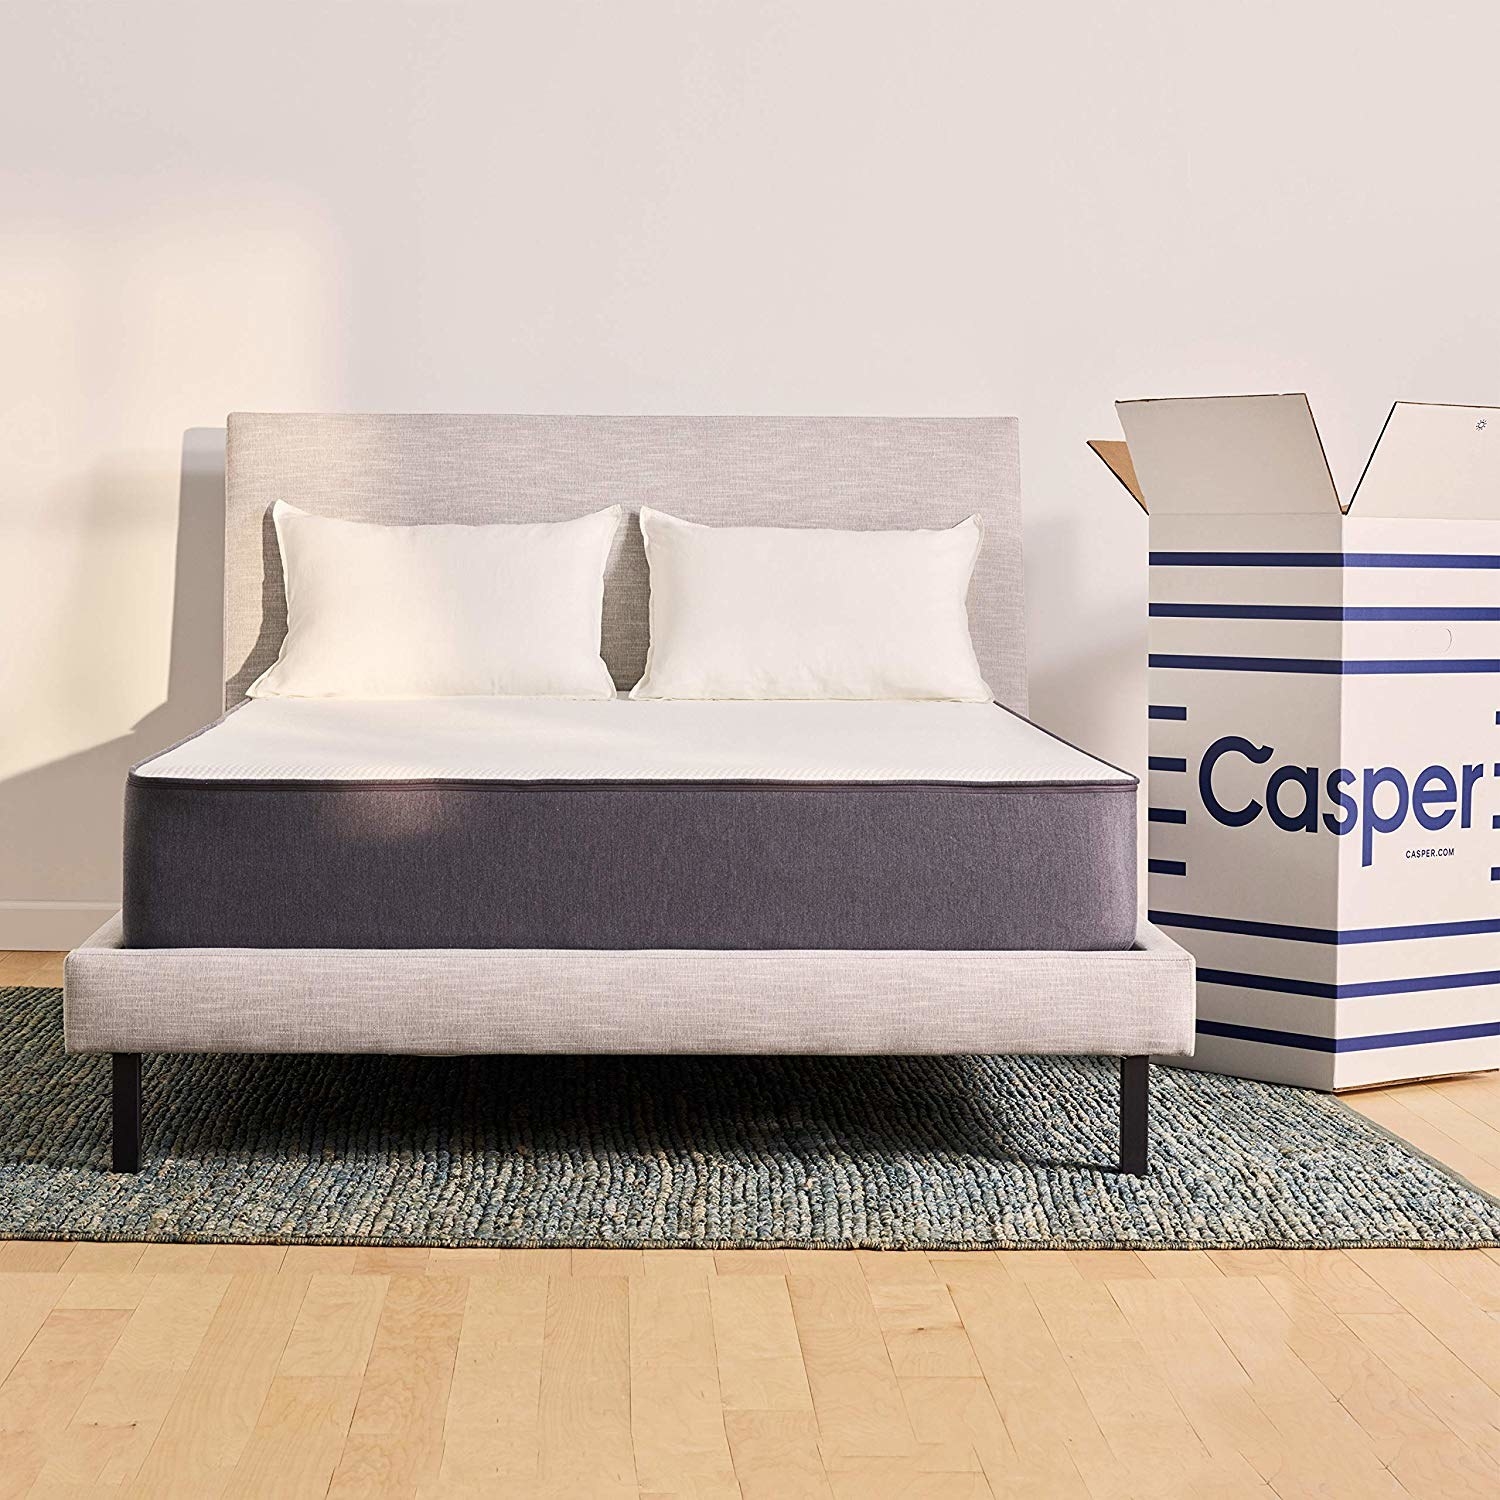 Casper mattress uncovered on bed frame 